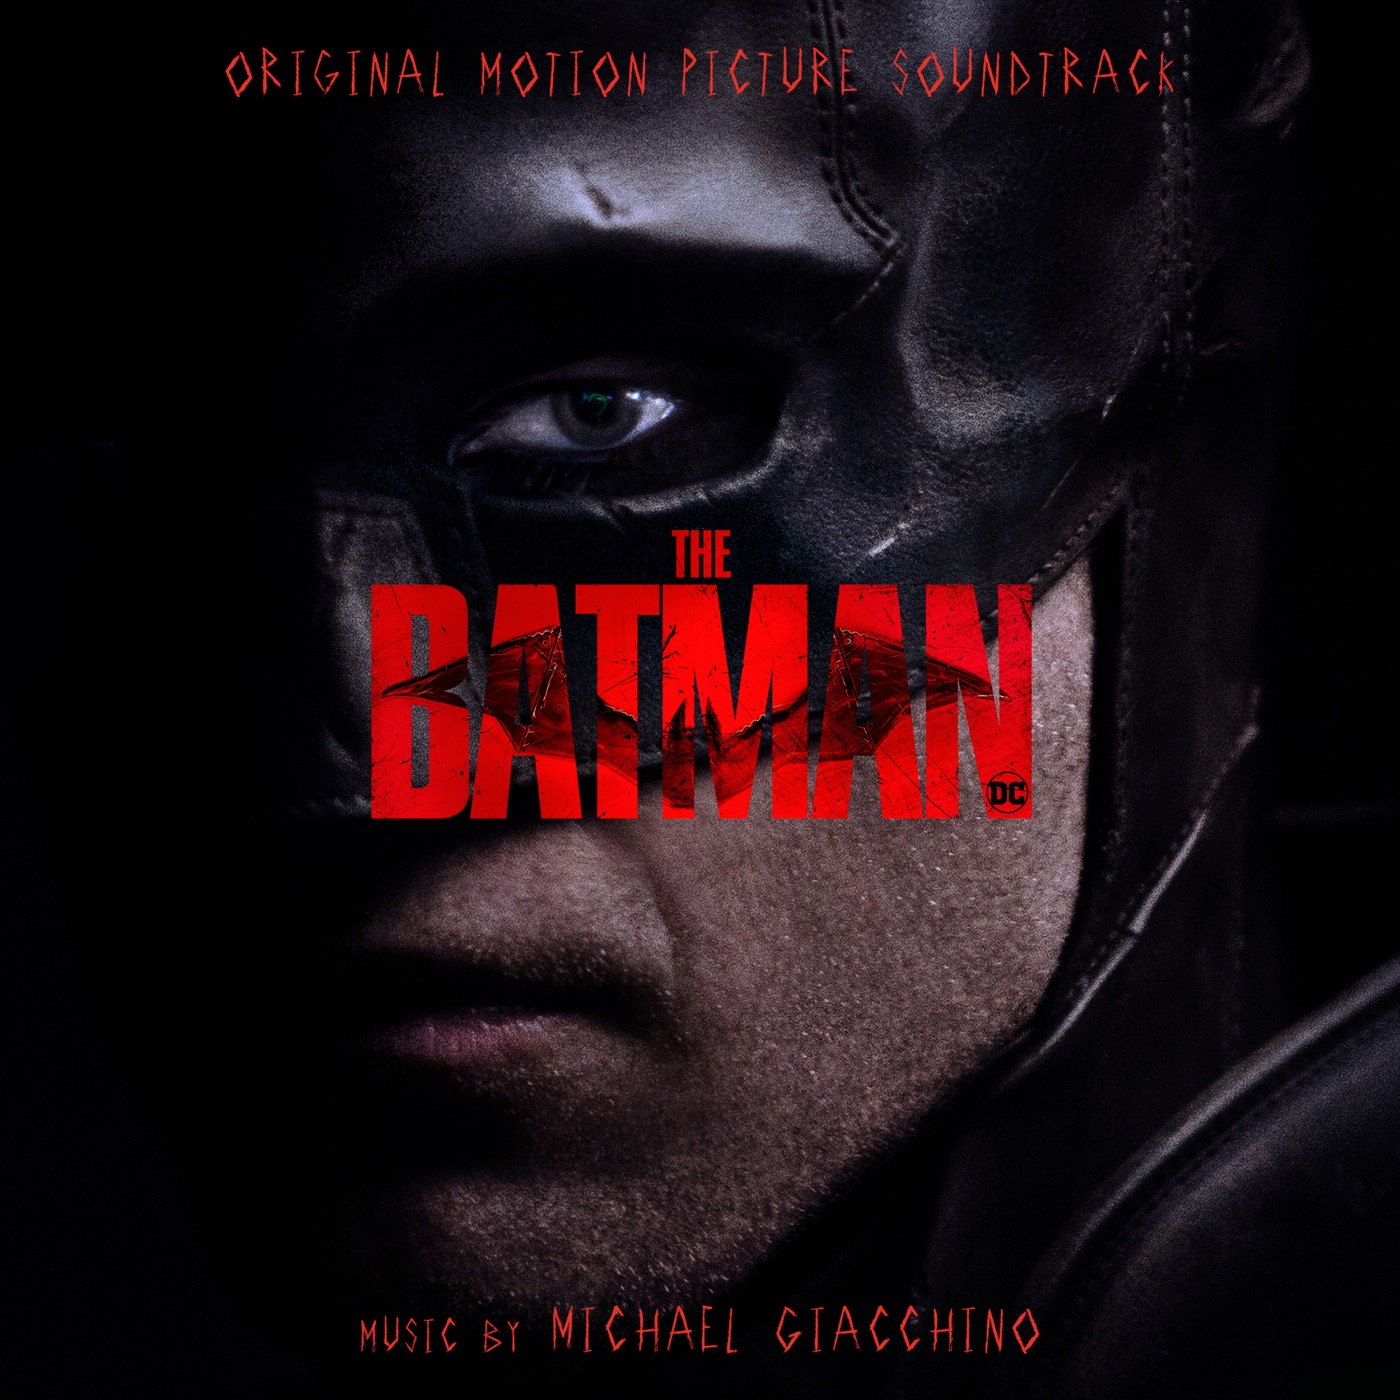 The Batman by Michael Giacchino